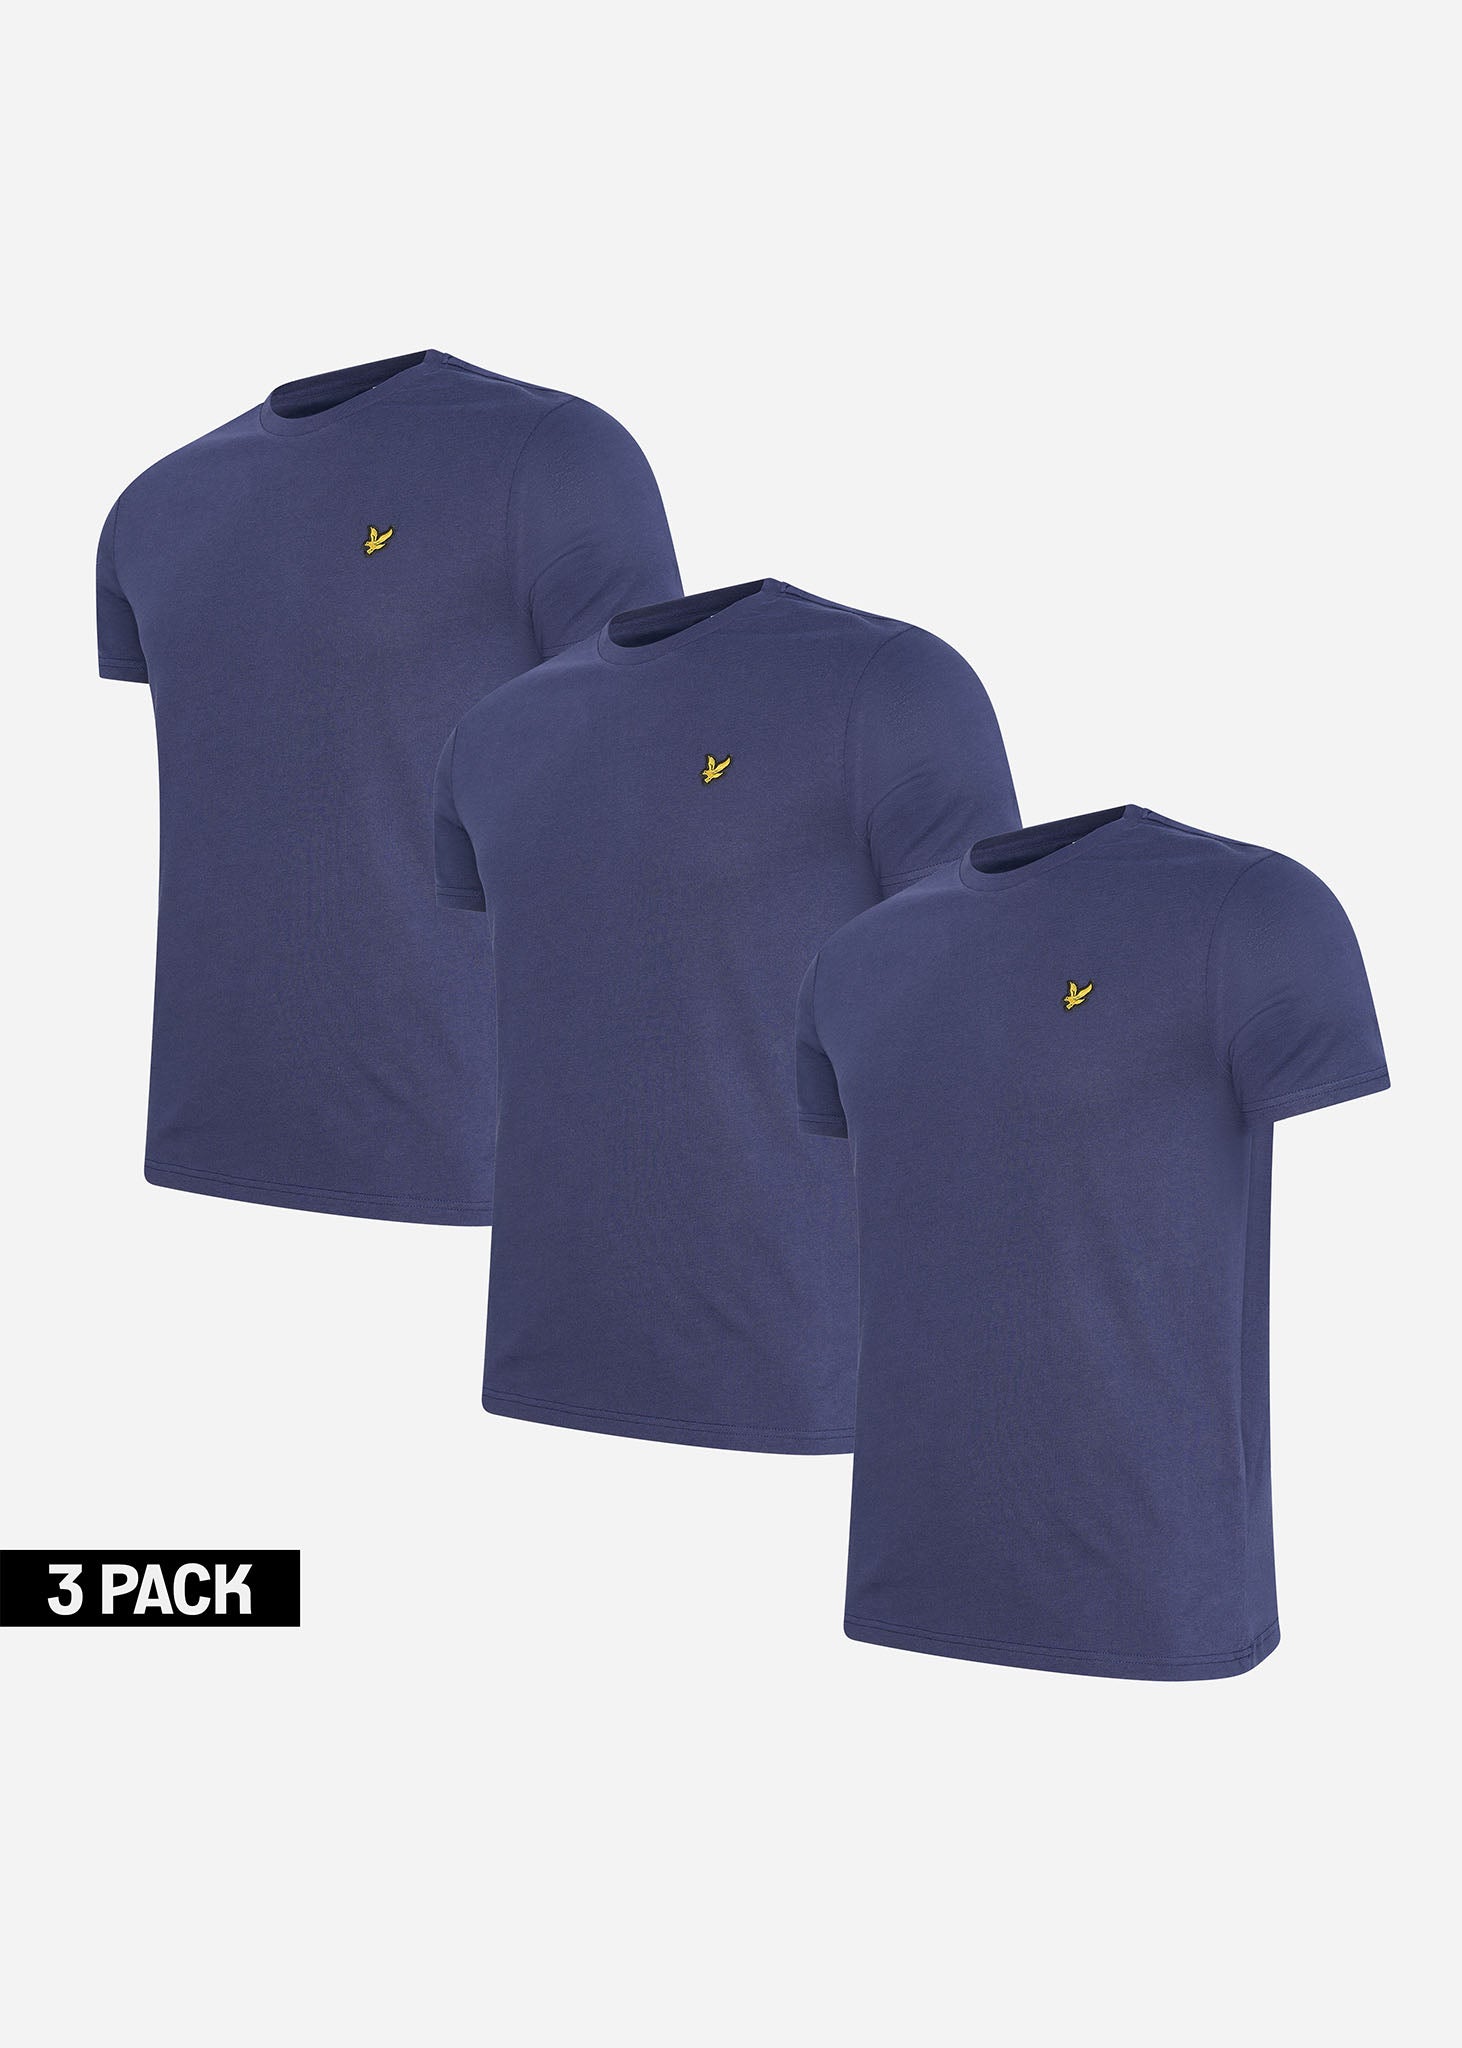 Lyle & Scott T-shirts  Crew neck t-shirt - navy 3 pack 